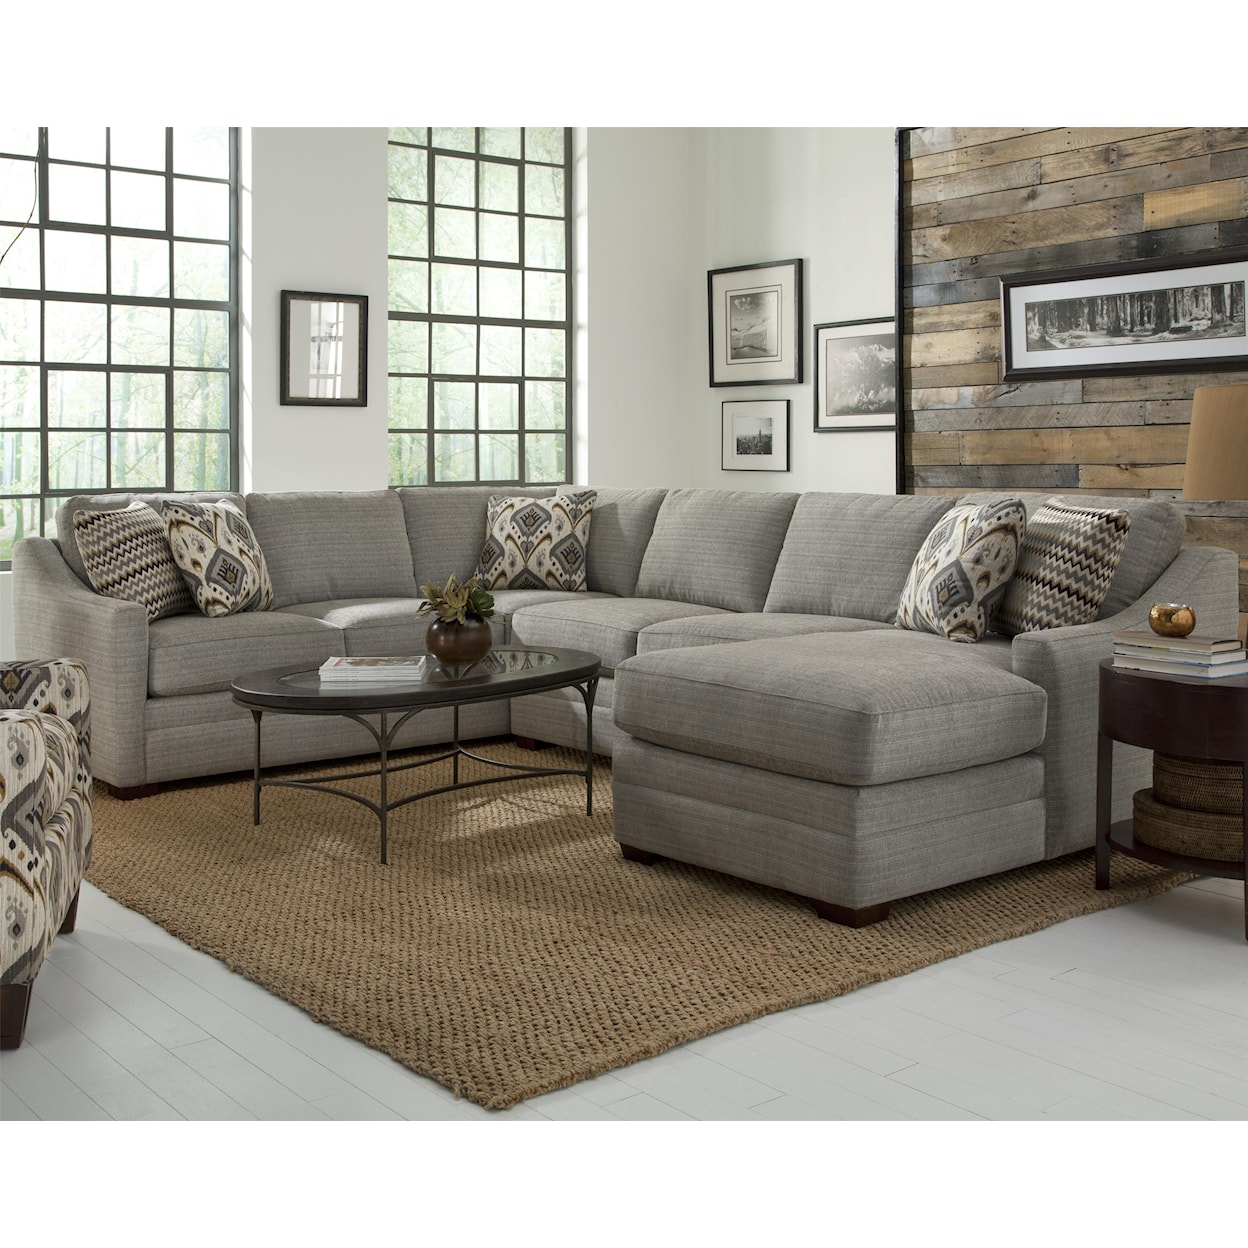 Craftmaster F9 Series Customizable 4 Pc Sectional Sofa